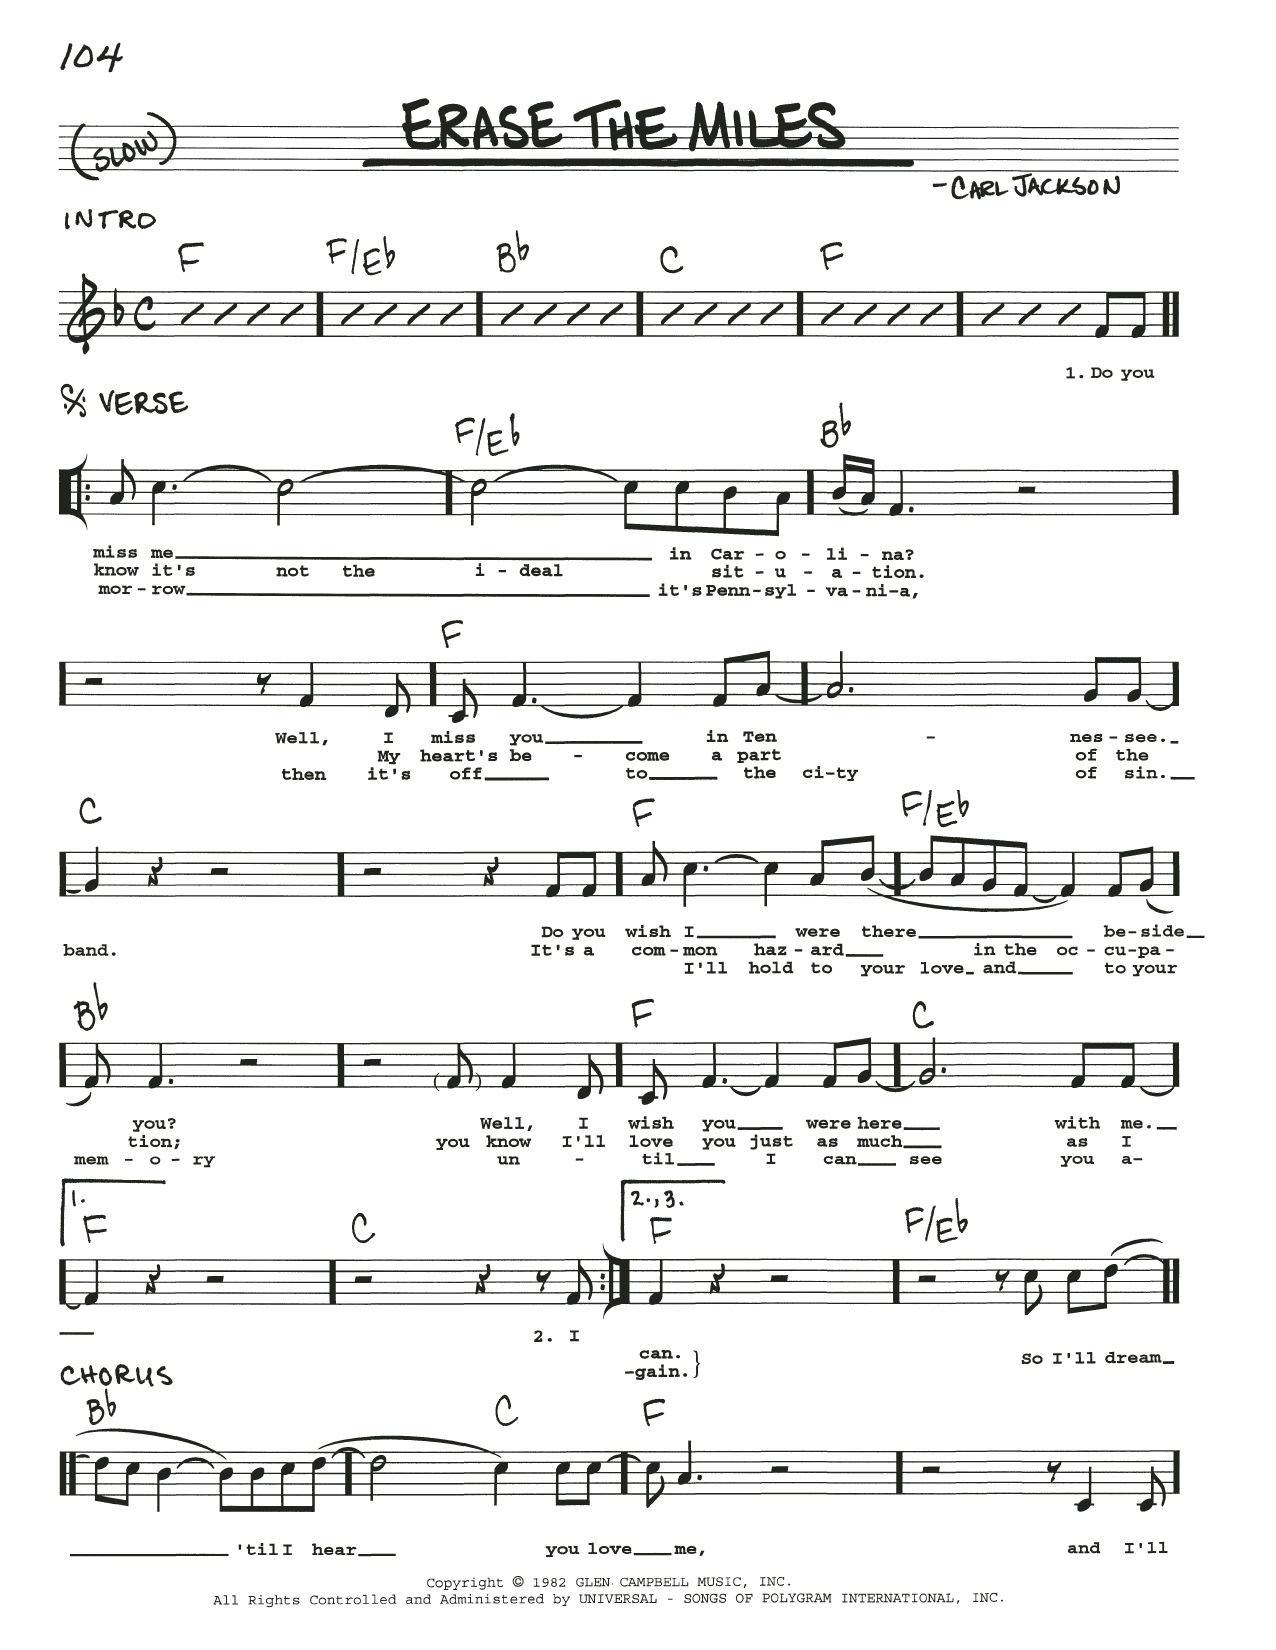 Carl Jackson Erase The Miles Sheet Music Notes & Chords for Real Book – Melody, Lyrics & Chords - Download or Print PDF